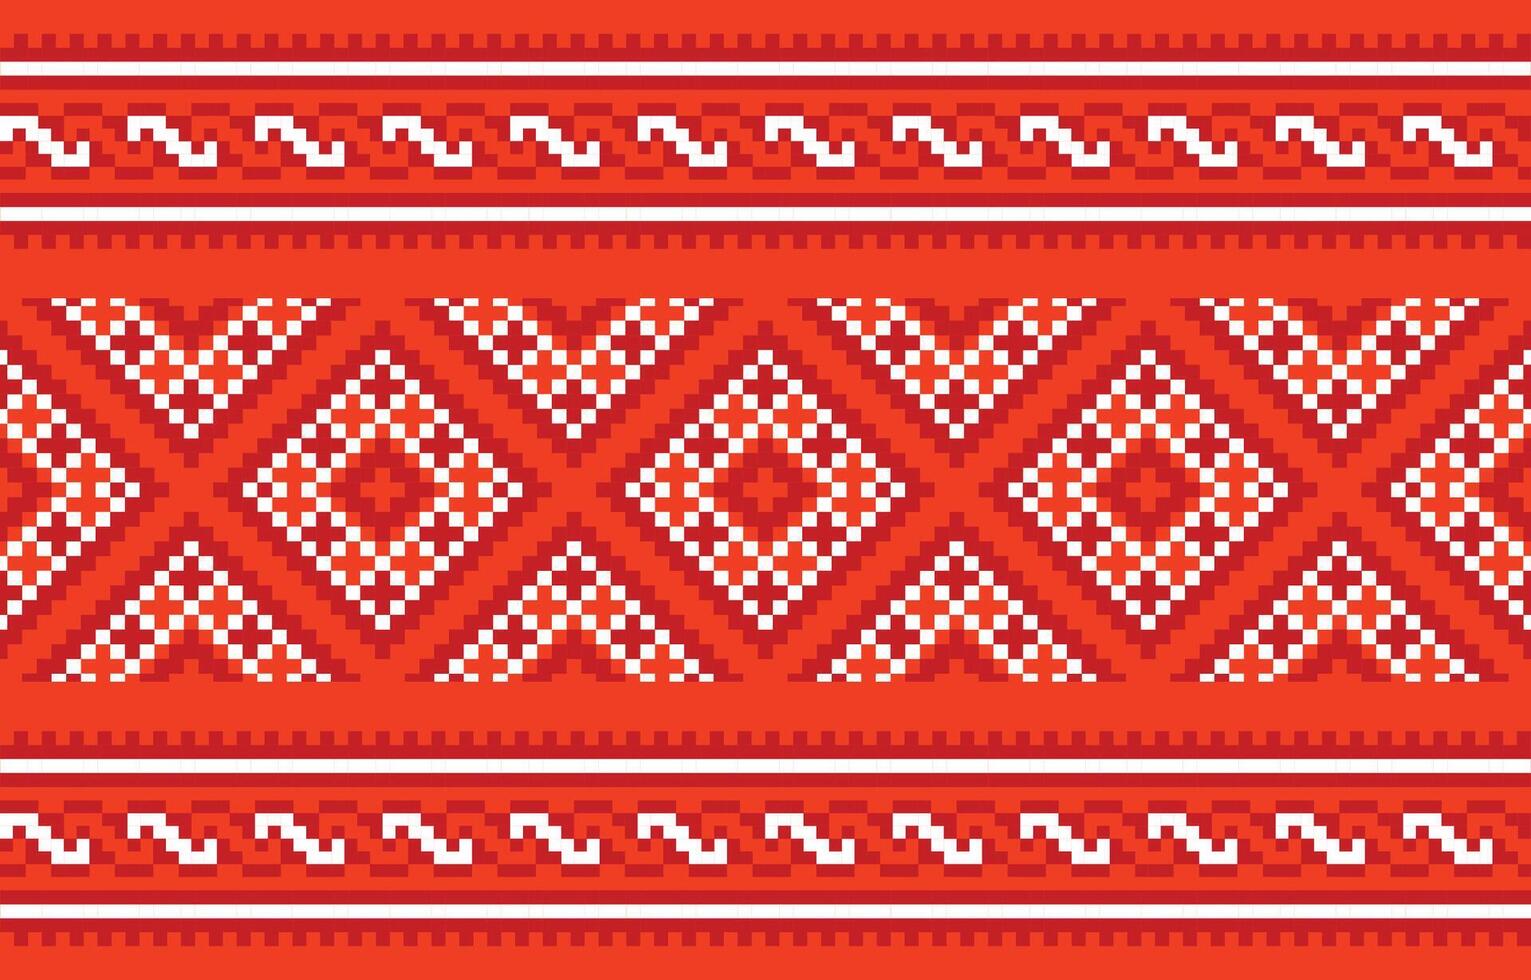 Ethnic geometric fabric patterns. Cross Stitch pattern.Abstract,vector,illustration.Design for motif,patola,sari,dupatta,pixel,zigzag,border,ikat,texture,clothing,wrapping,decoration,carpet. vector